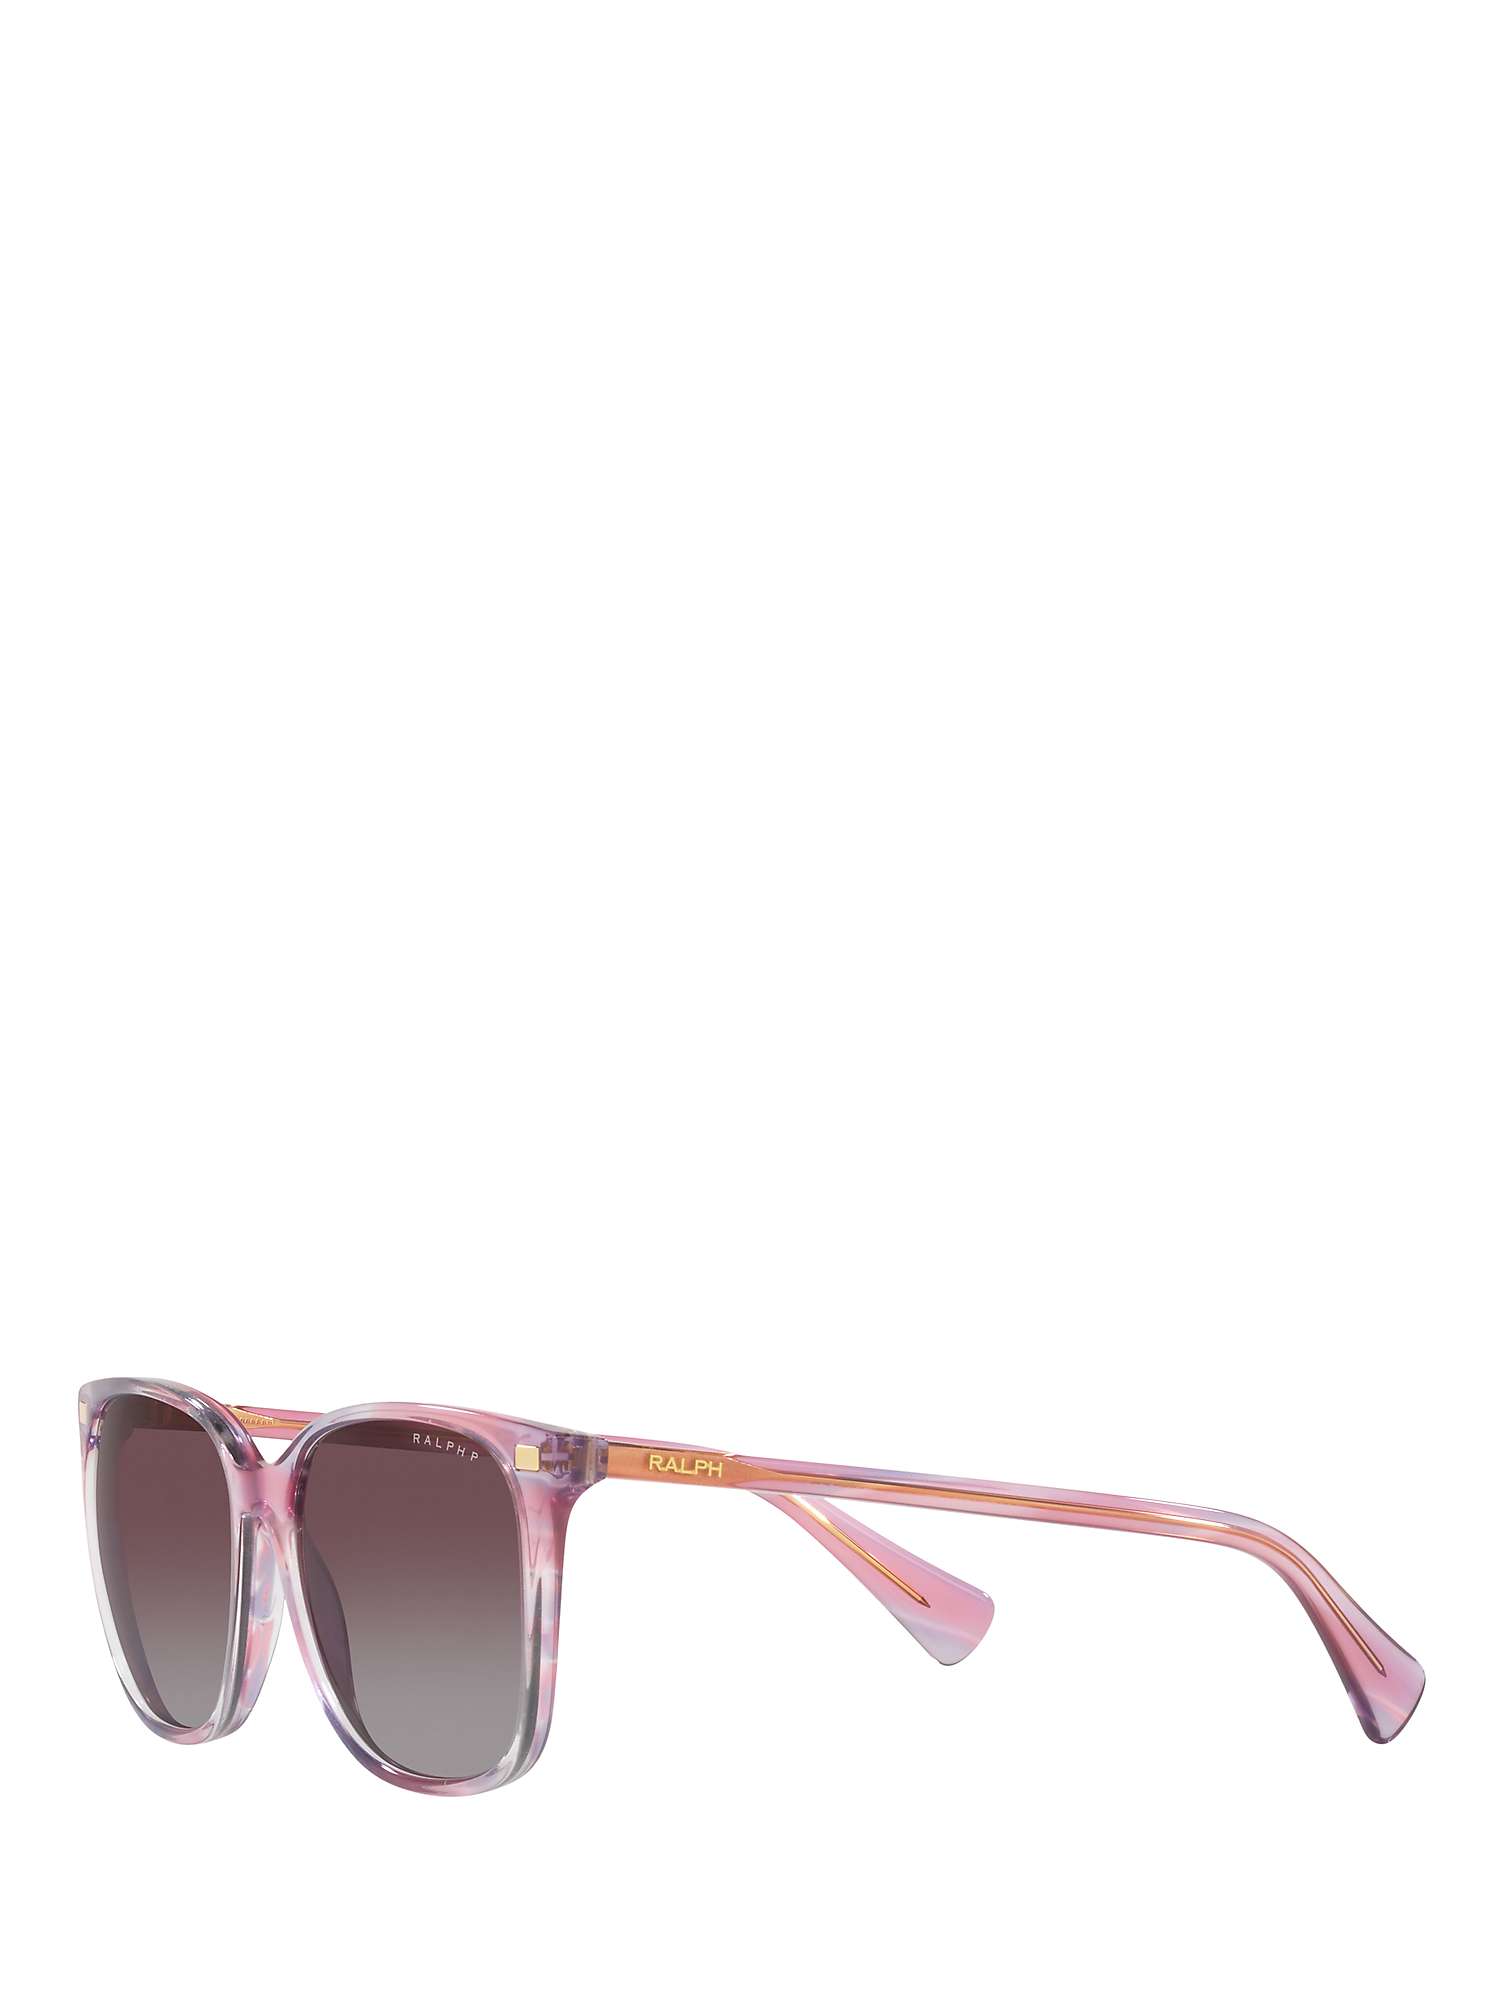 Buy Ralph RA5293 Women's Polarised Square Sunglasses Online at johnlewis.com